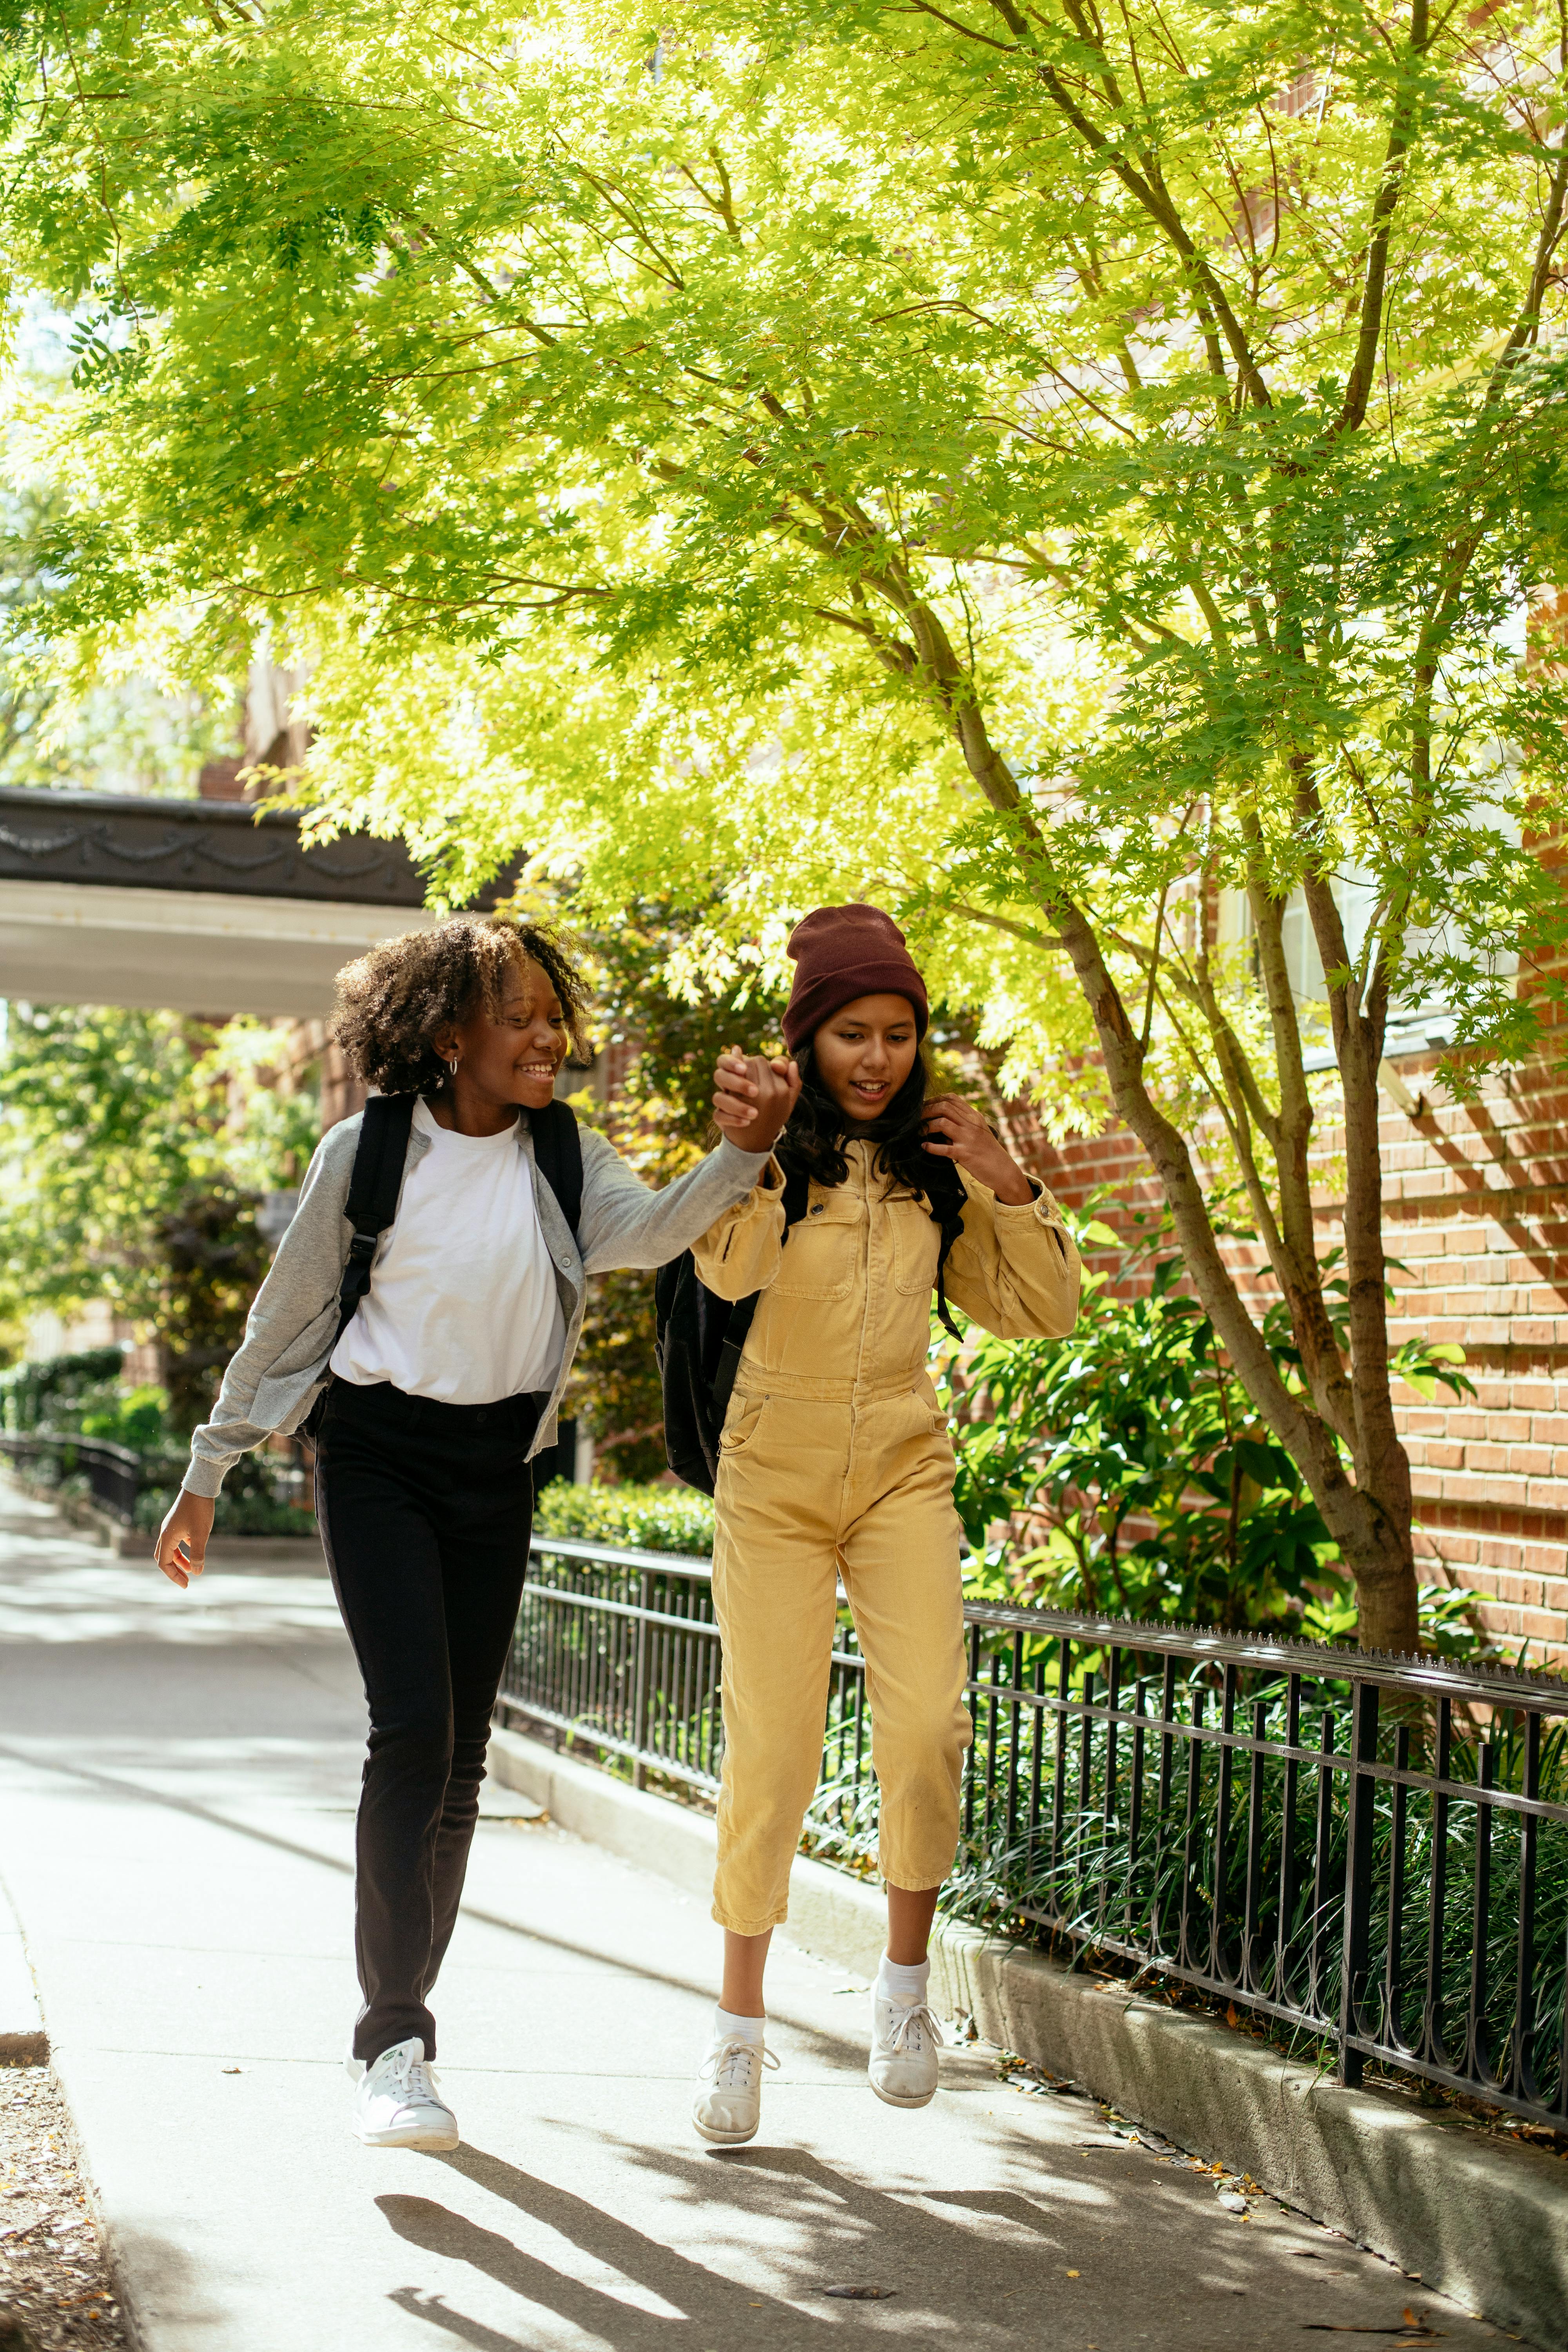 content multiethnic schoolchildren talking while walking on urban pavement